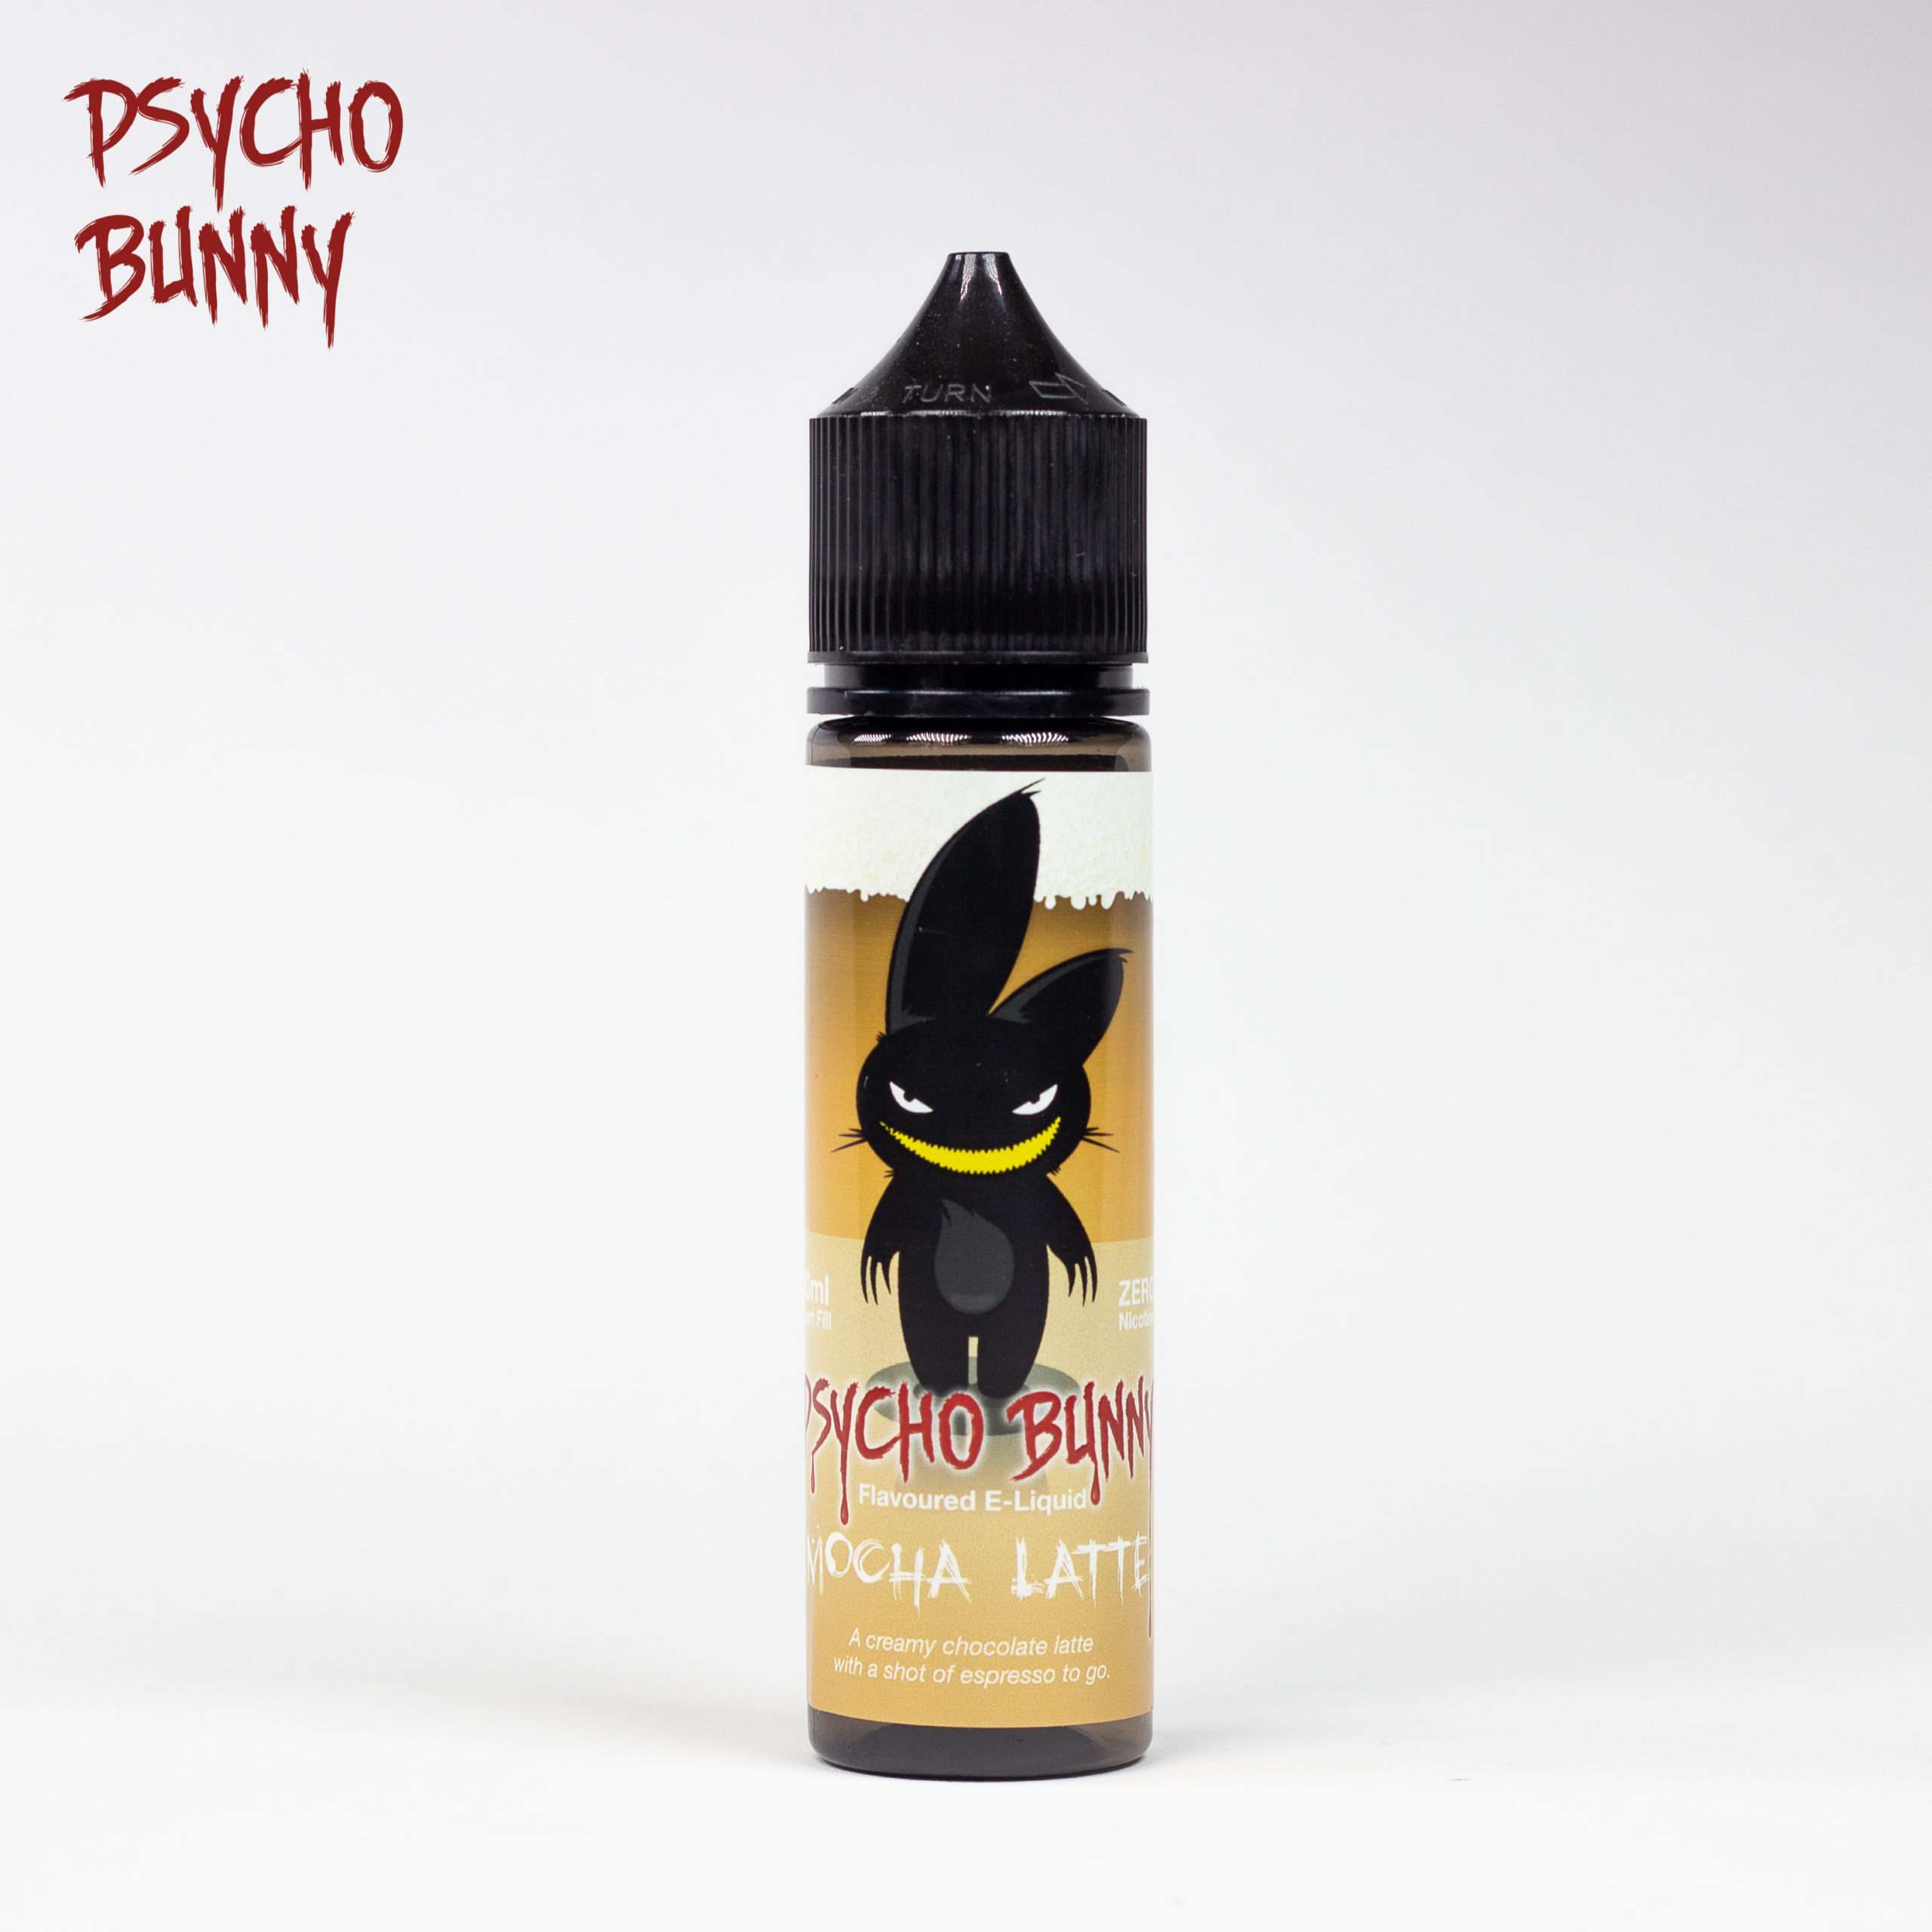  Psycho Bunny - Mocha Latte - 50ml 